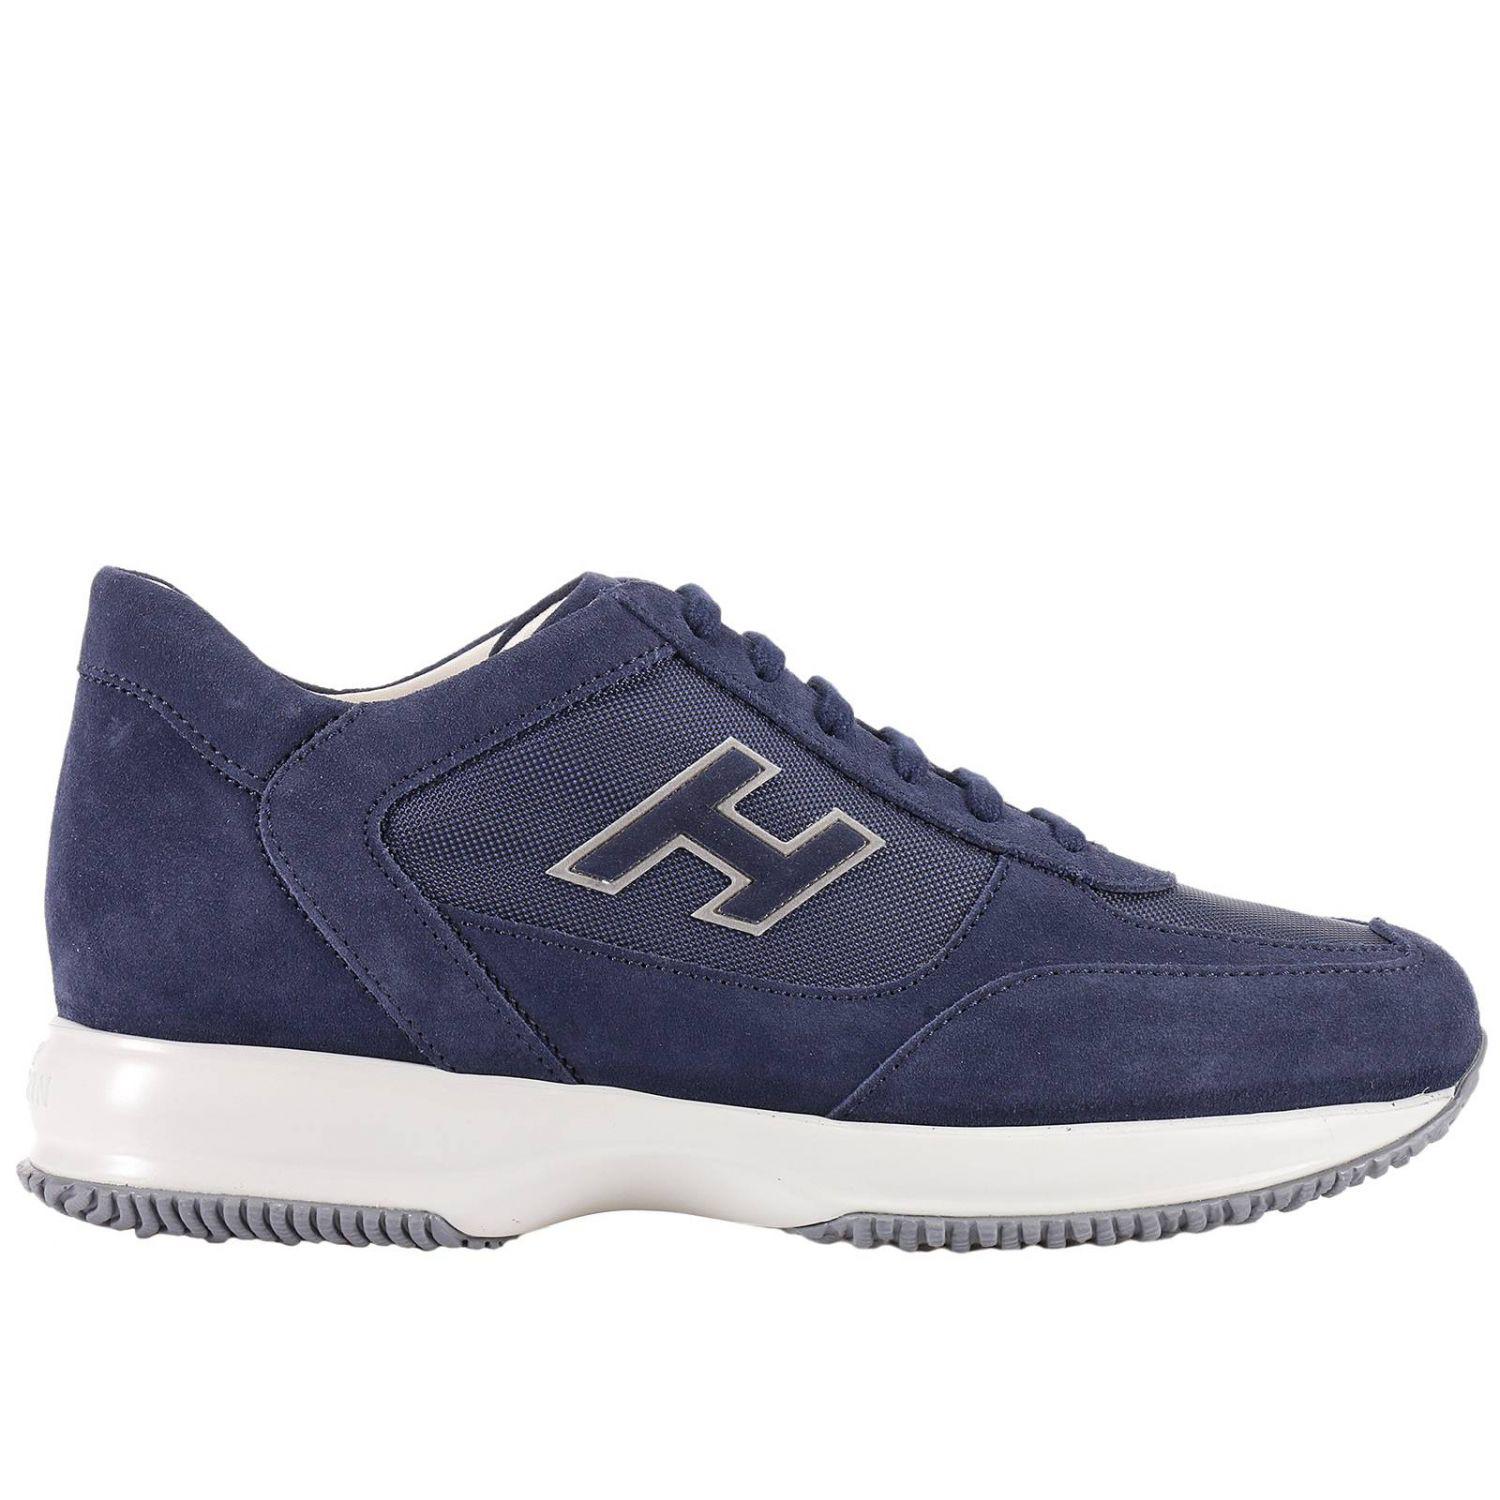 Lyst - Hogan Sneakers Shoes Men in Blue for Men